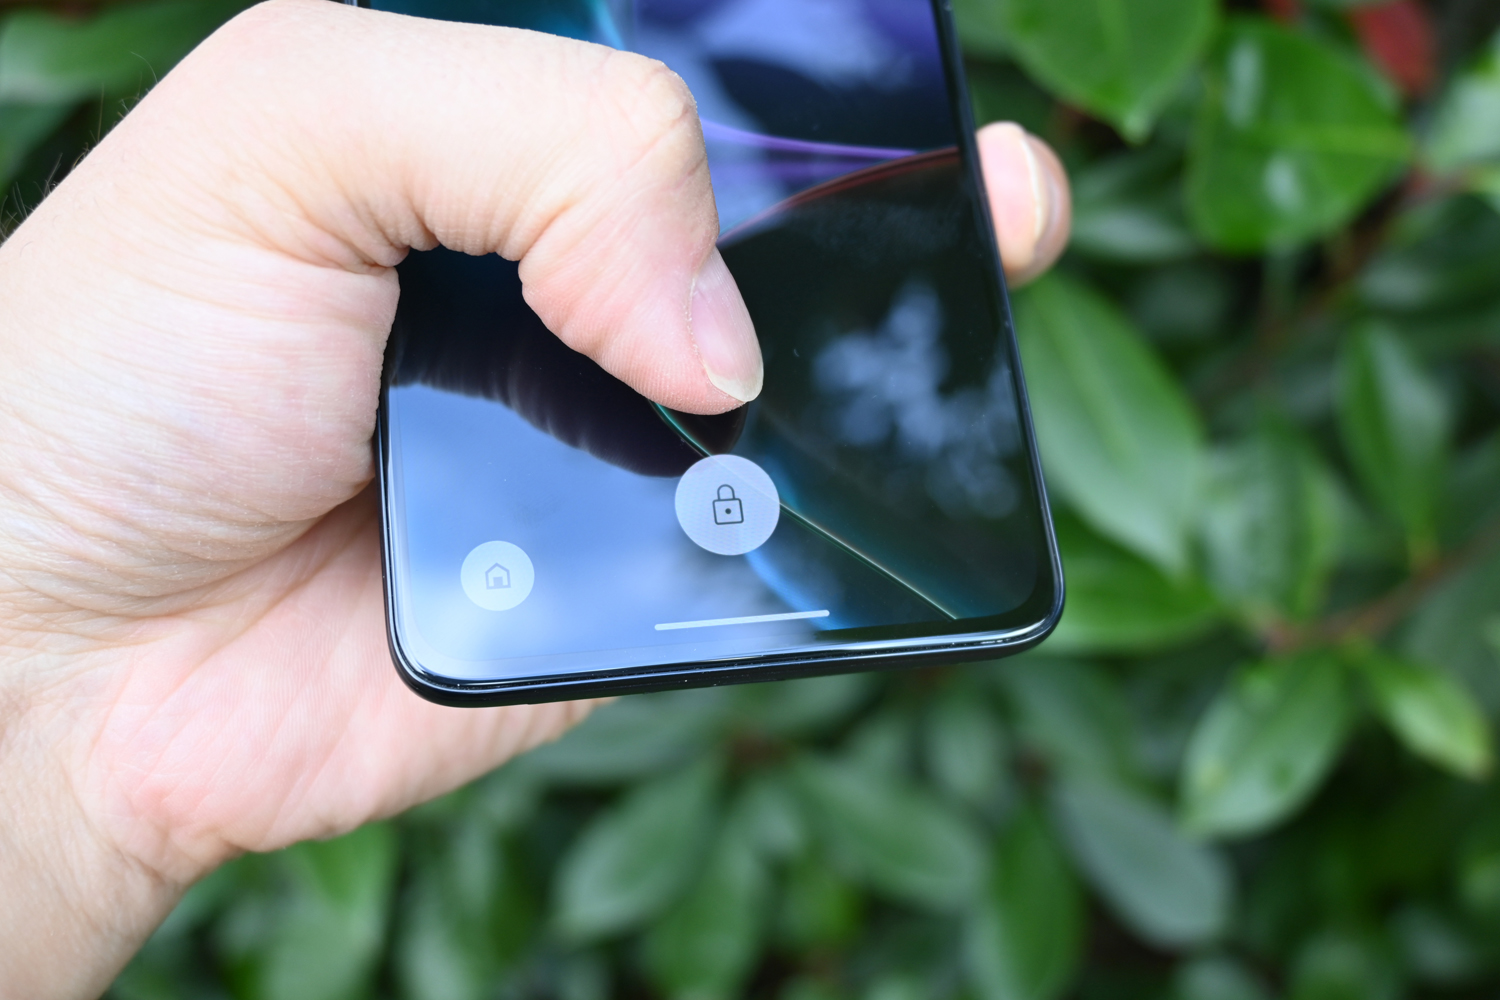 Motorola Edge 30 smartphone fingerprint sensor